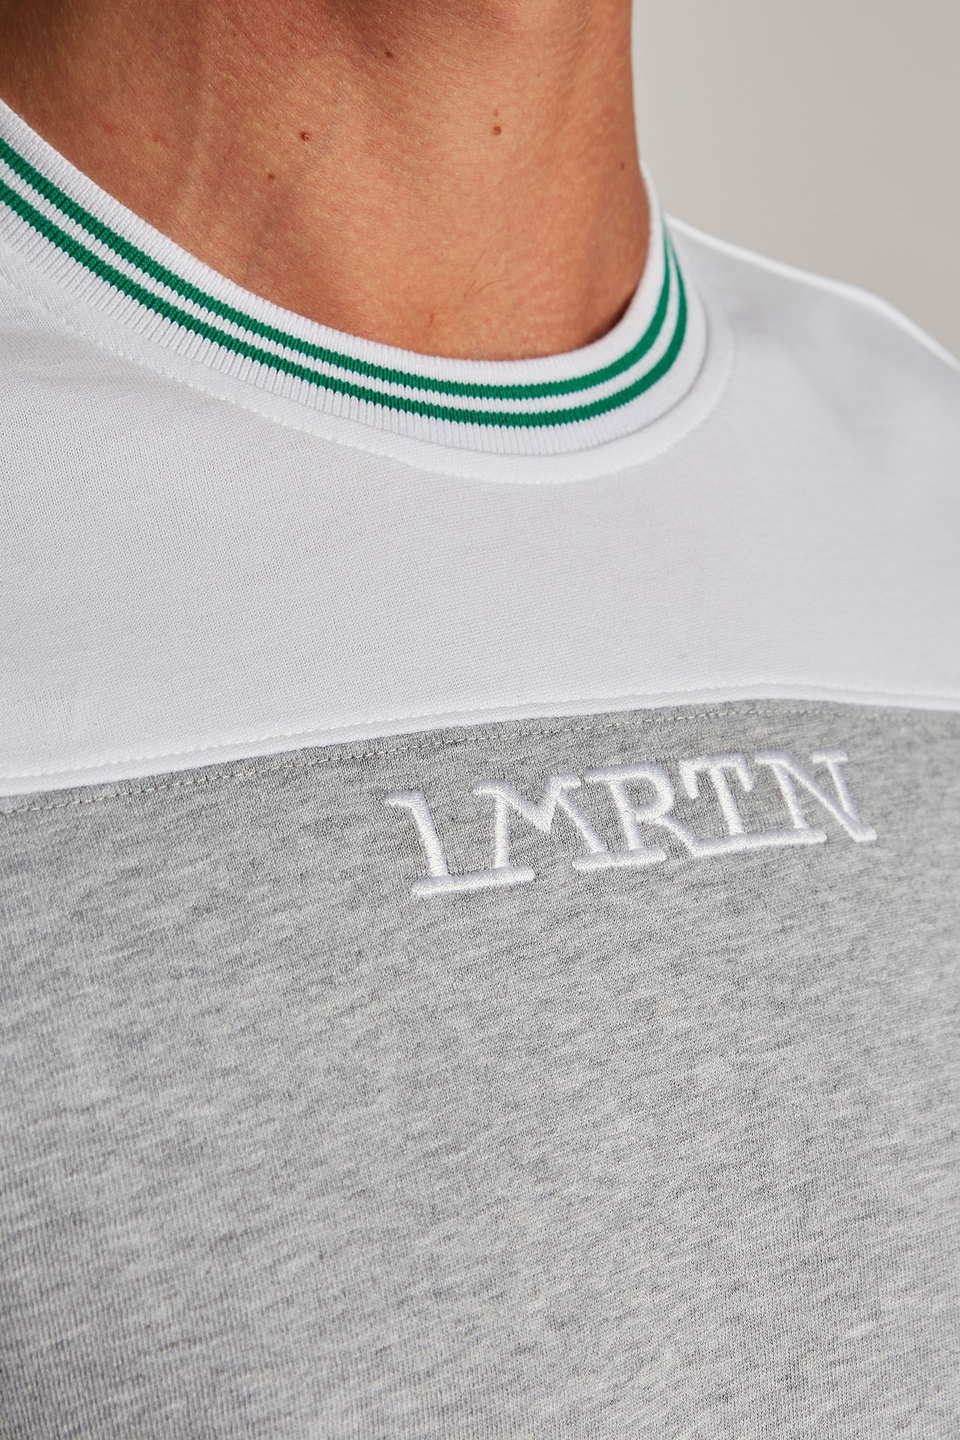 Camiseta de hombre de manga corta con cuello en contraste, modelo oversize | La Martina - Official Online Shop